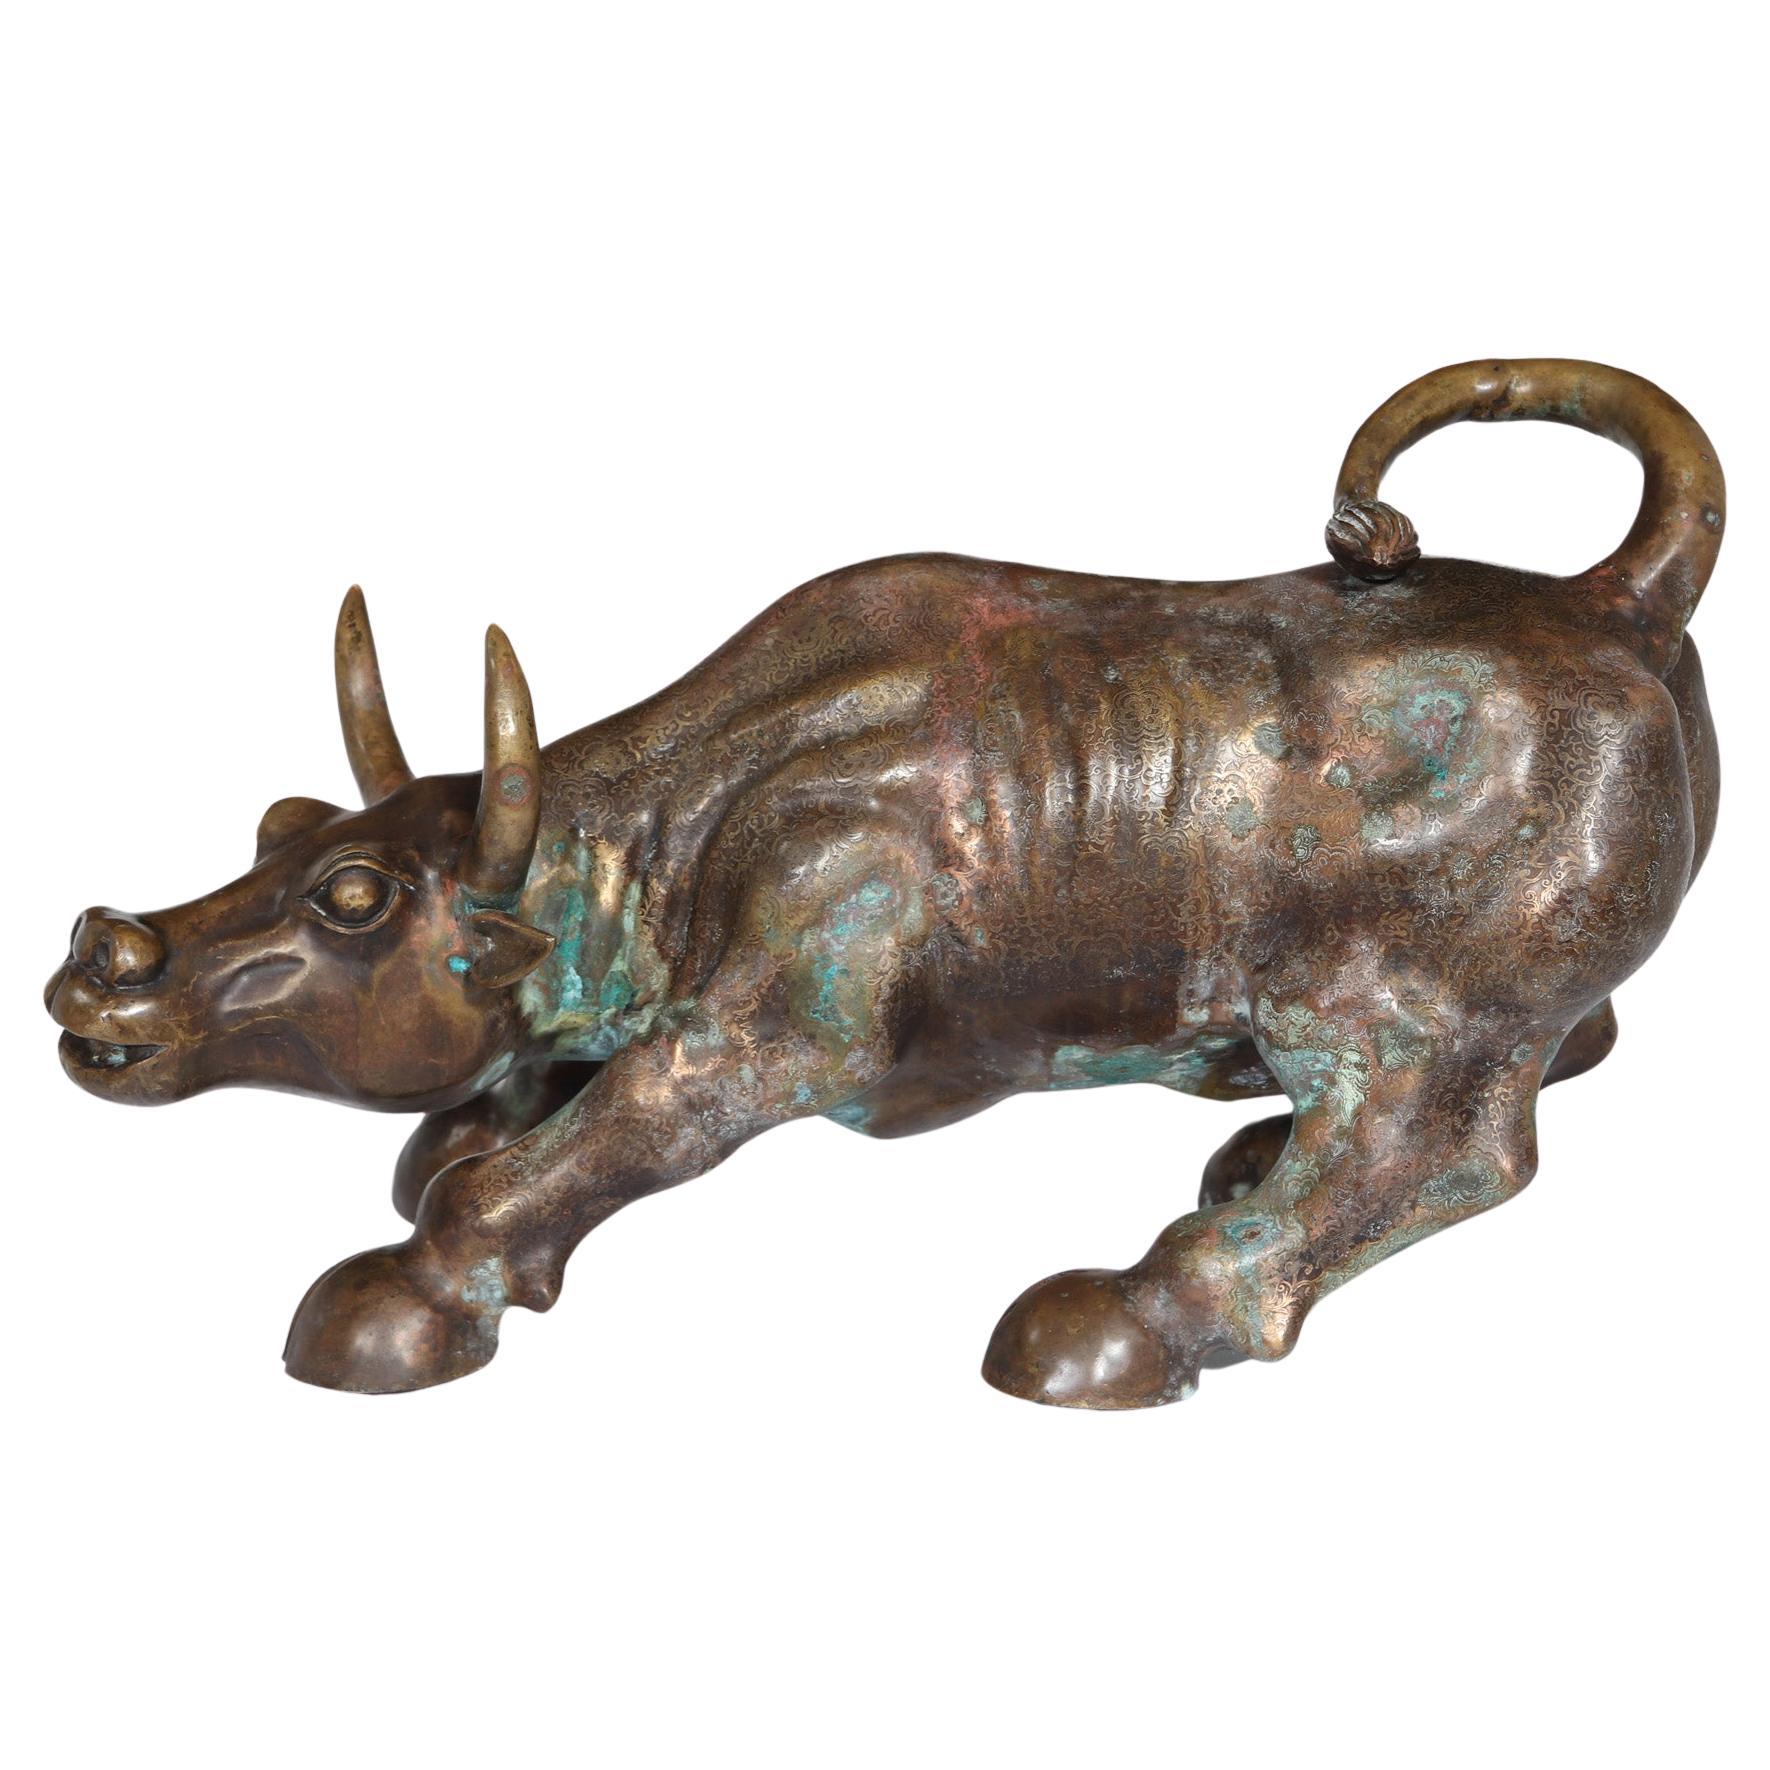 Sculpture de taureau en bronze moderniste